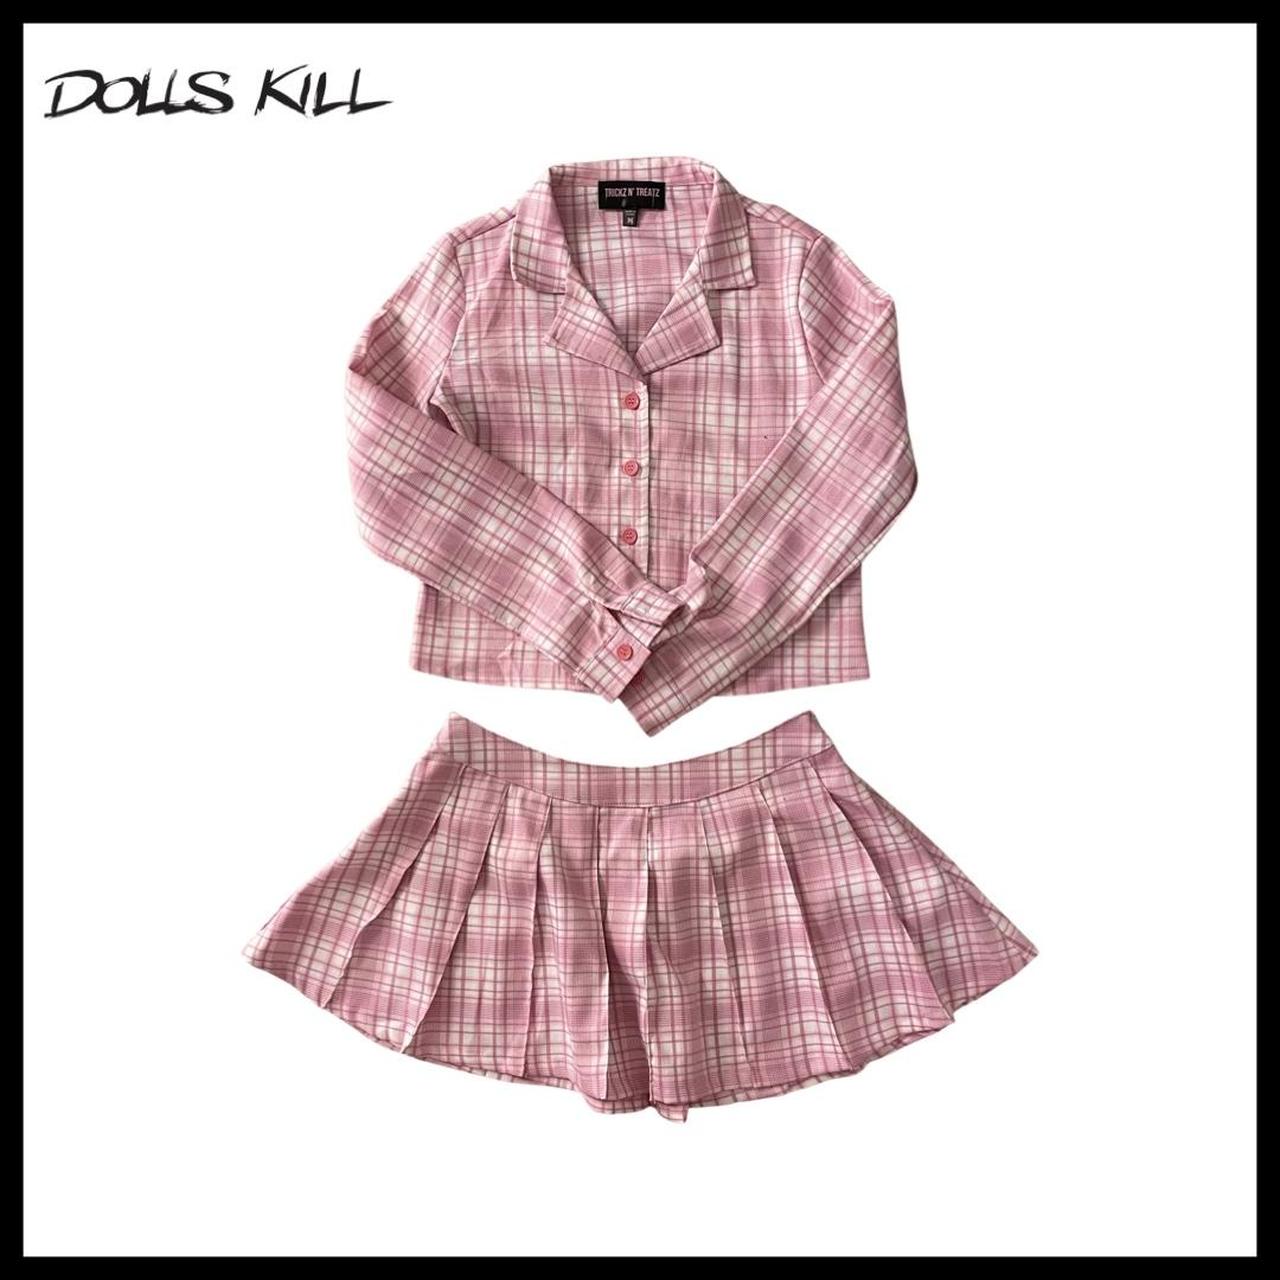 Plus Size Trickz N Treatz Vinyl Nurse Costume - Black/Pink – Dolls Kill